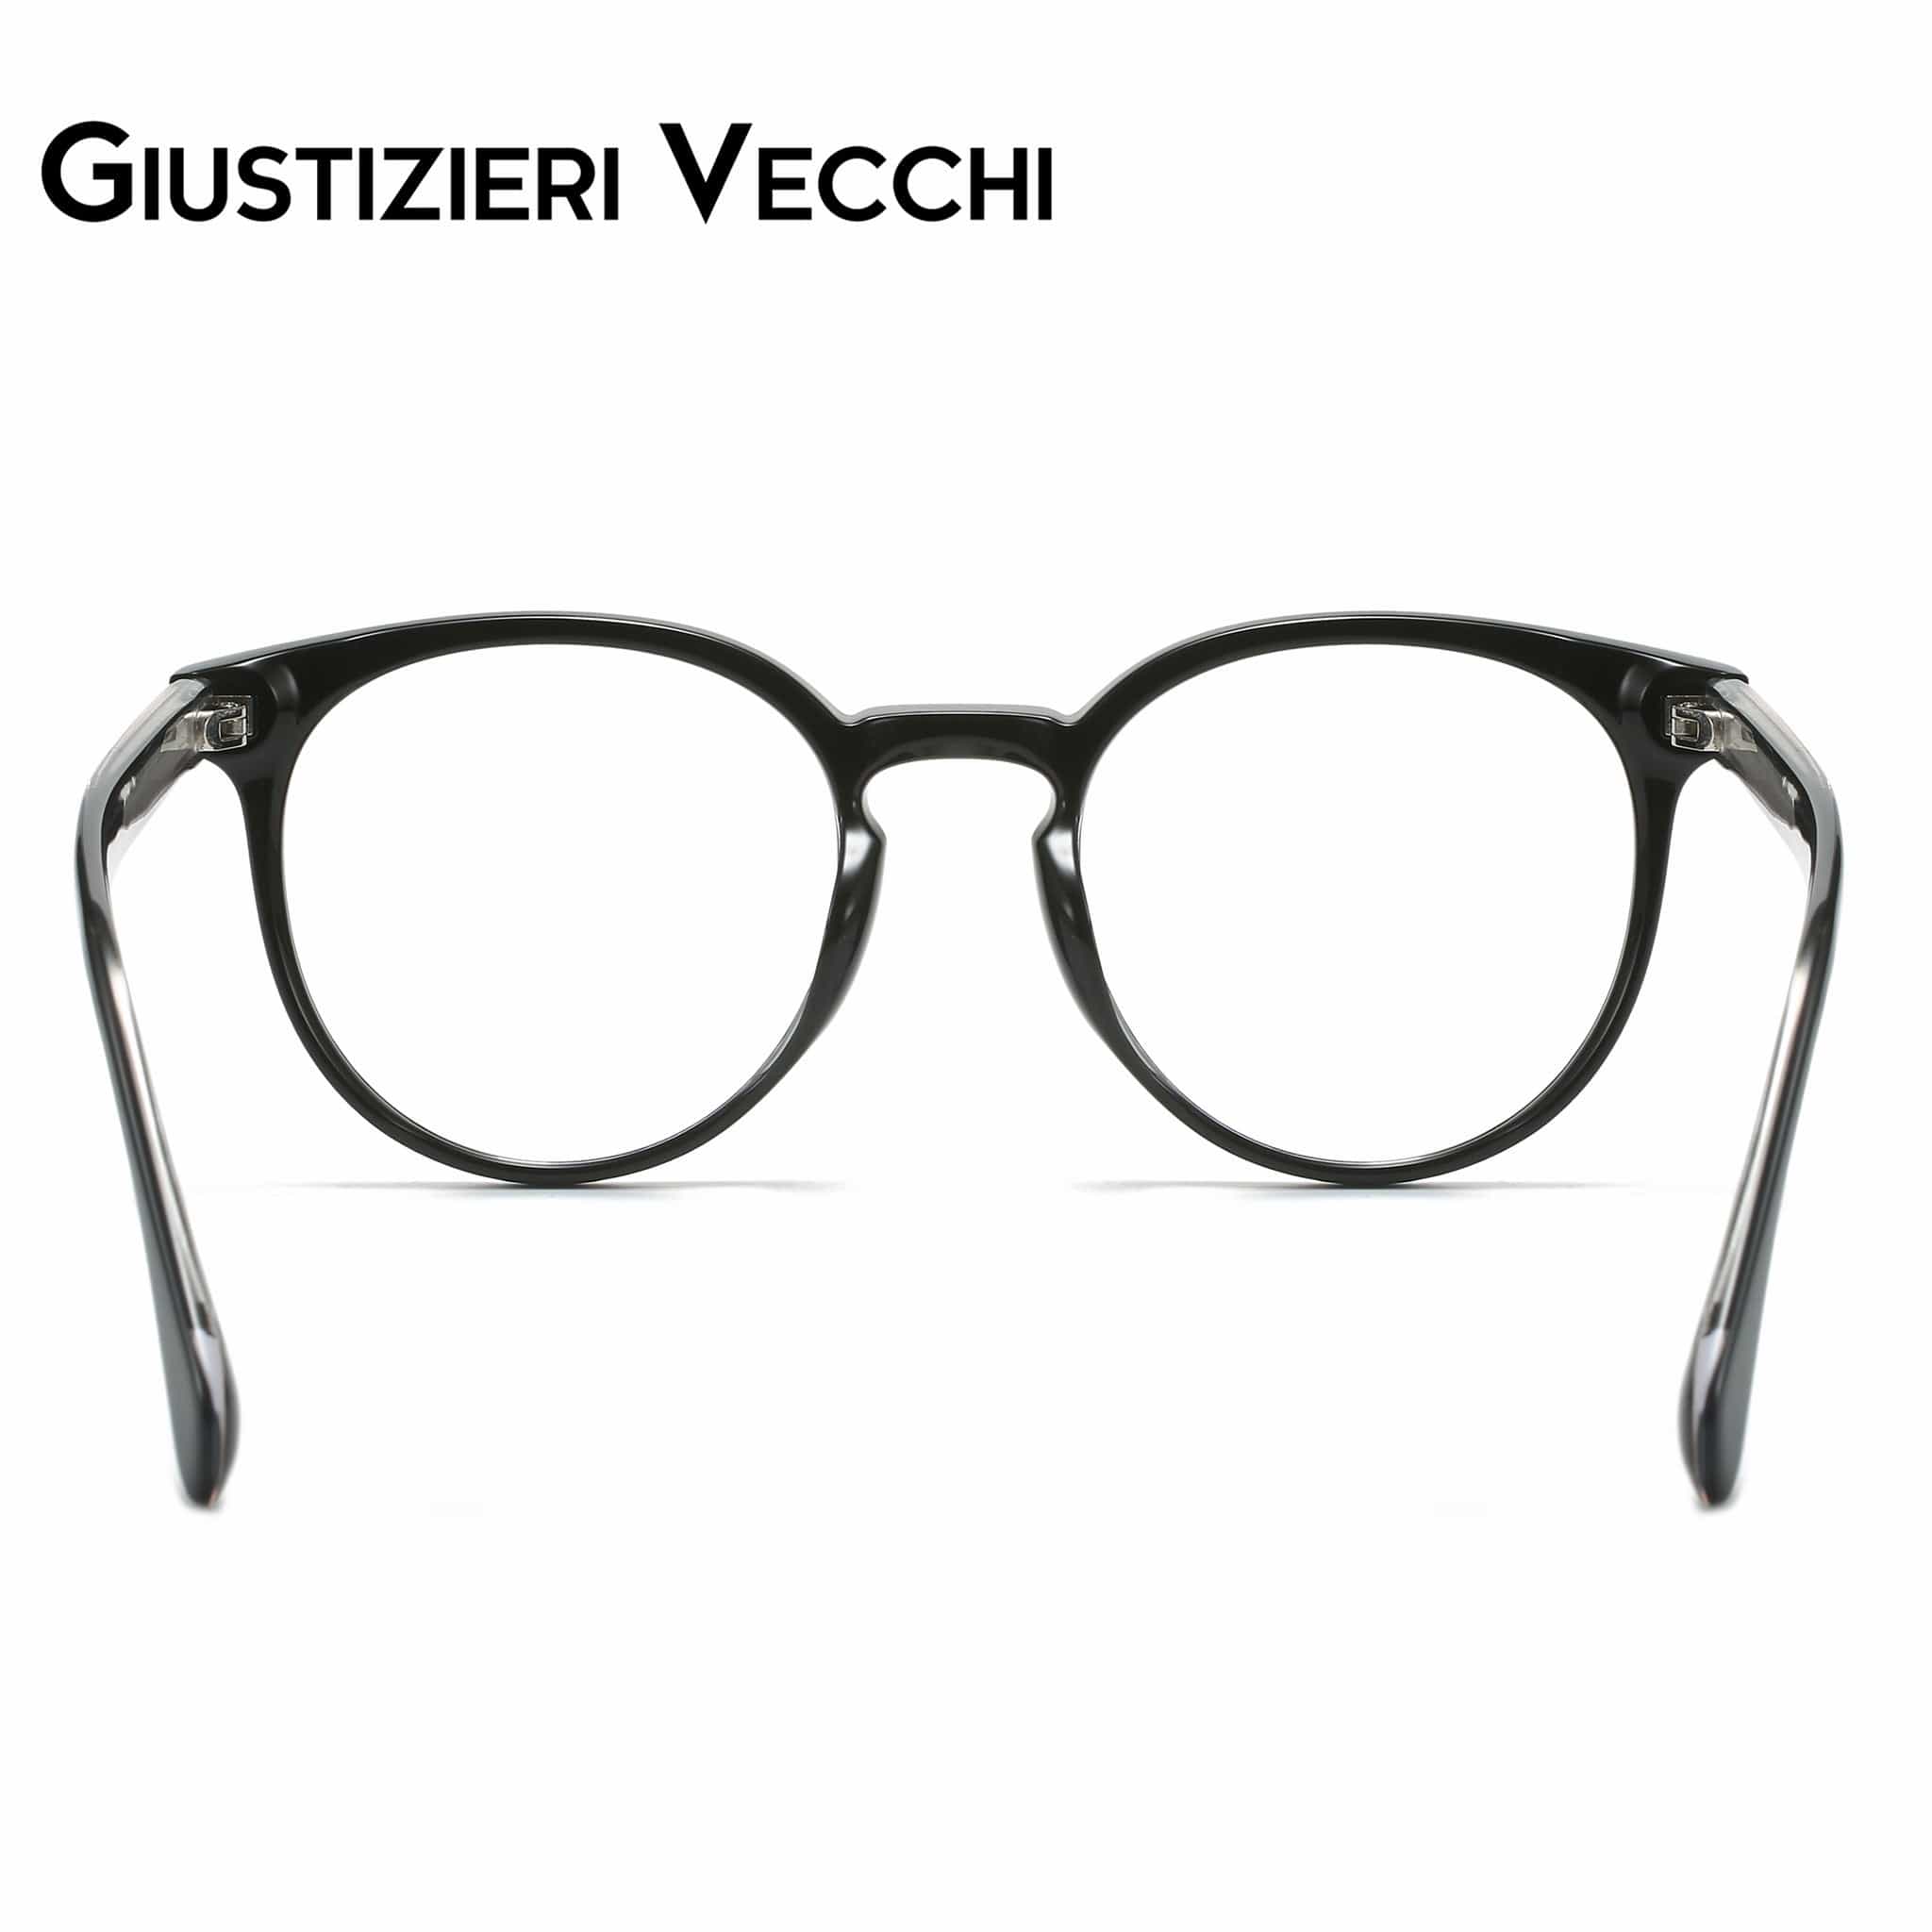 GIUSTIZIERI VECCHI Eyeglasses NeonBloom Uno